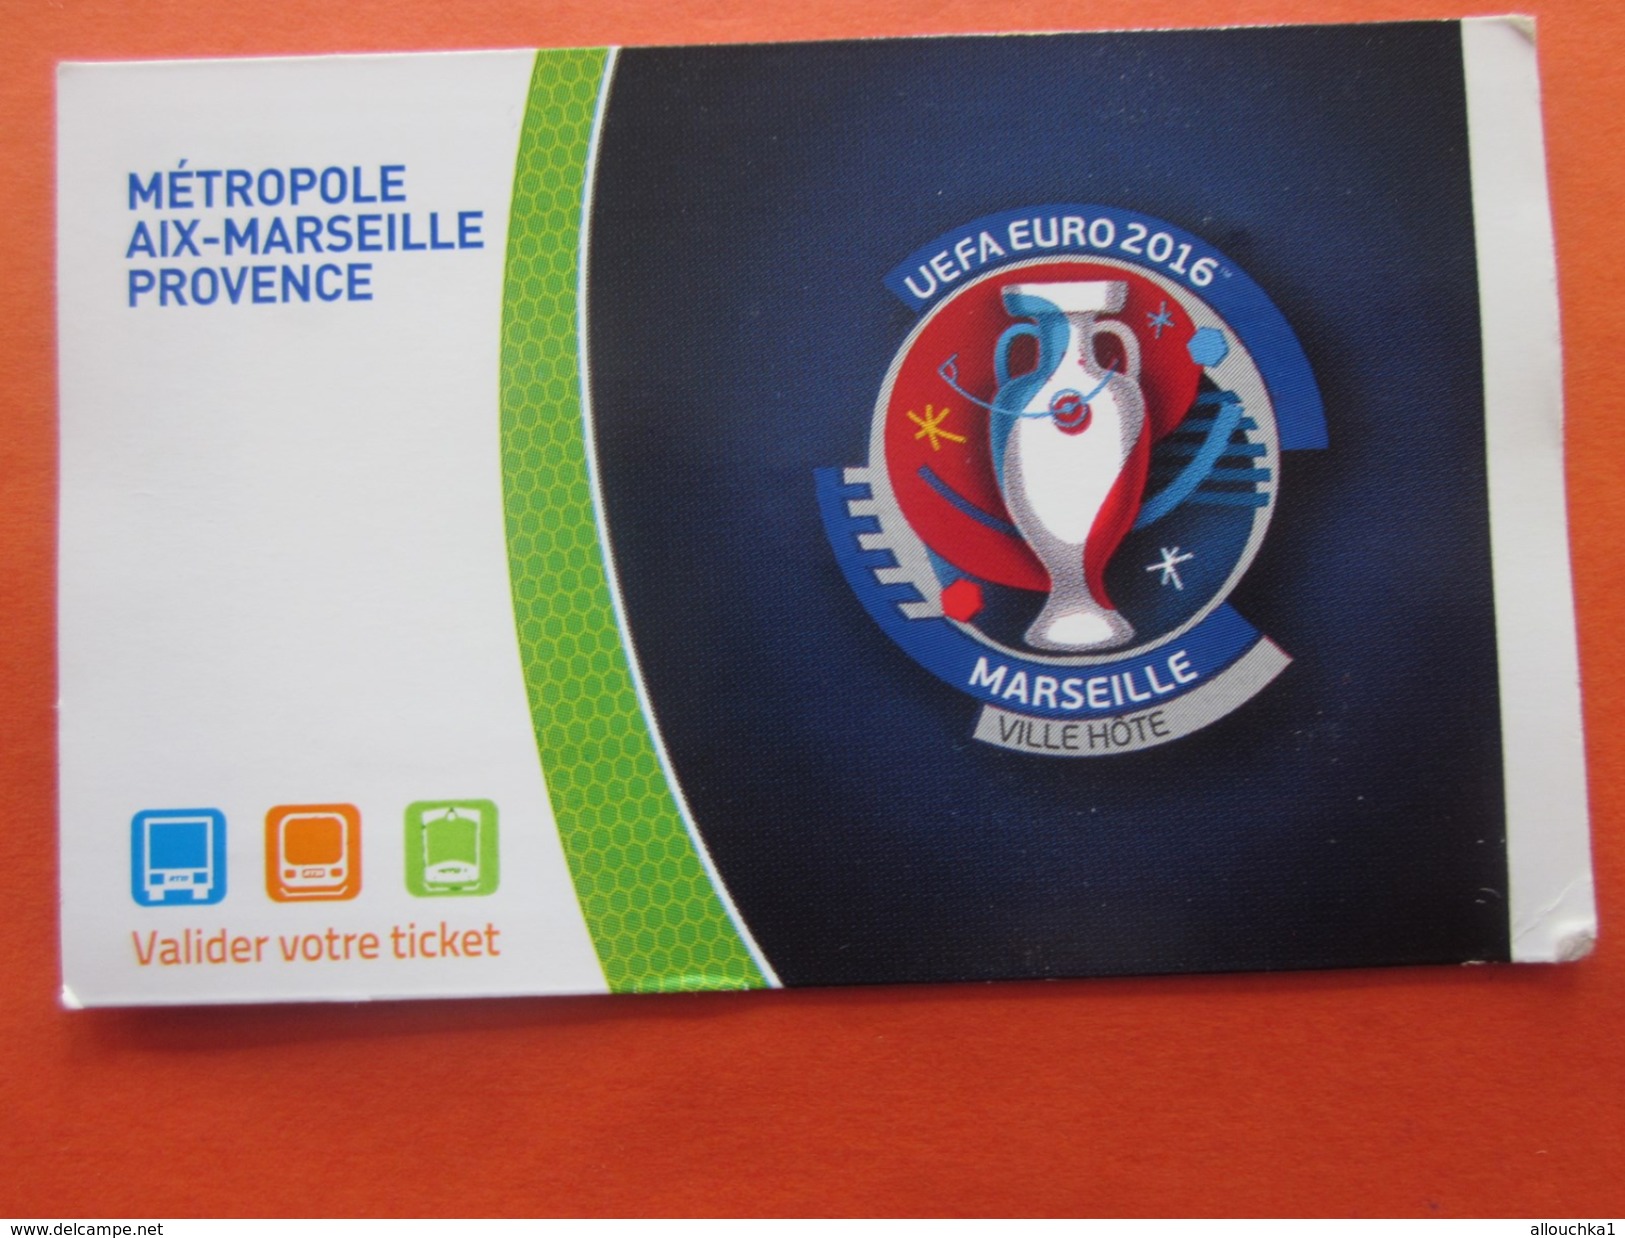 Titre Transport 2 Voyages  Jumelé Av Ticket Entrée Au Stadium UEFA Euro 2016 Football Marseille Ville Hôte>Métro >Europe - Europe